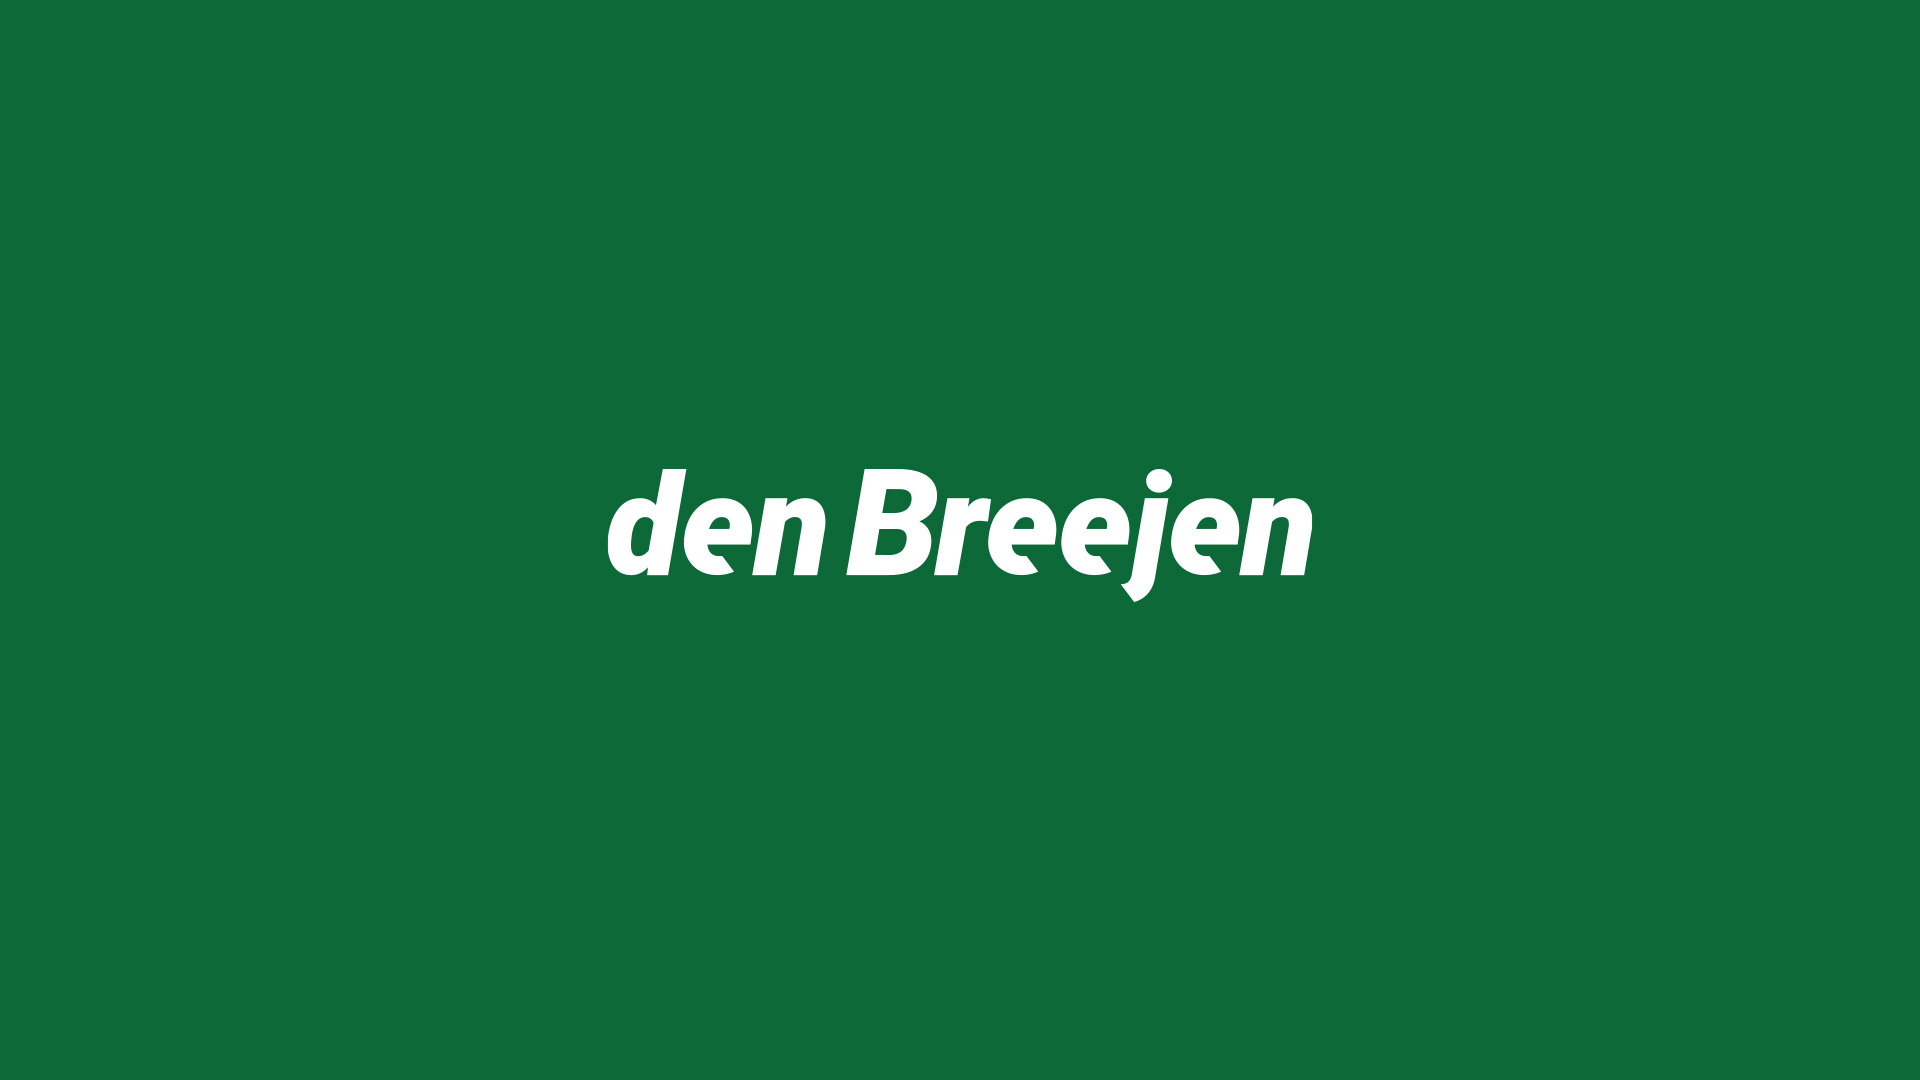 den-breejen-logo